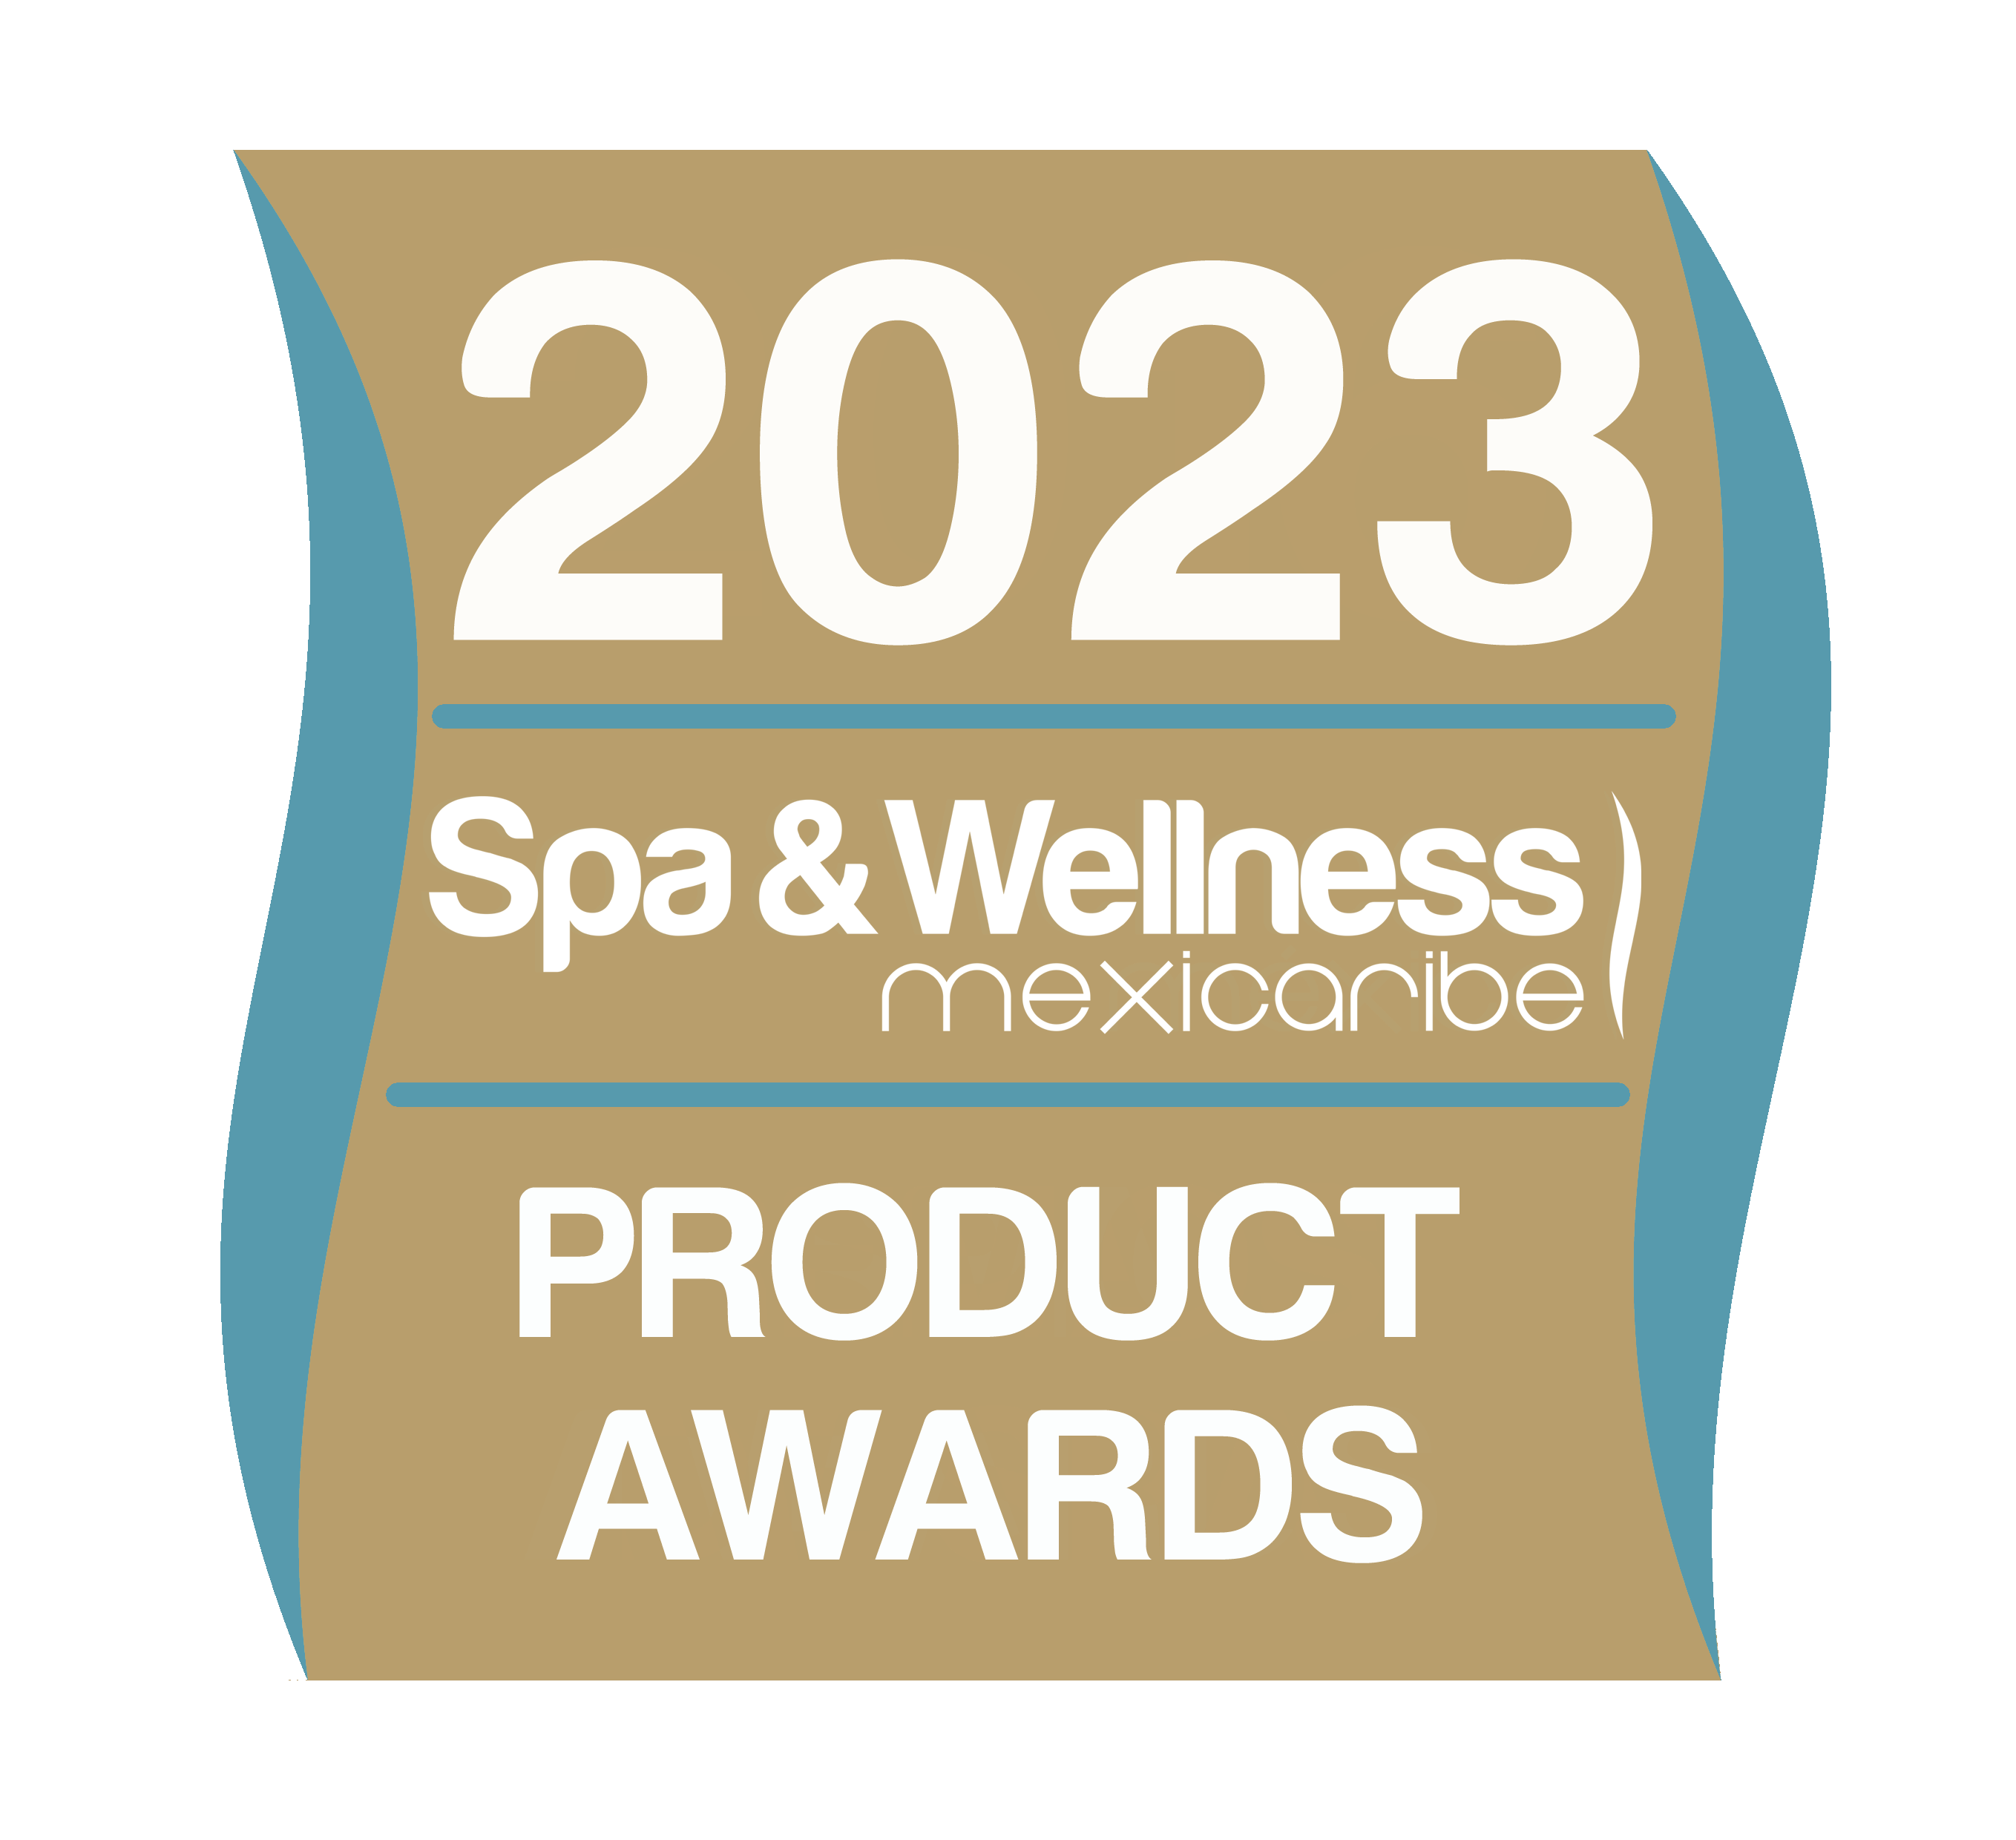 2023 spa & wellness mexicaribe product awards.